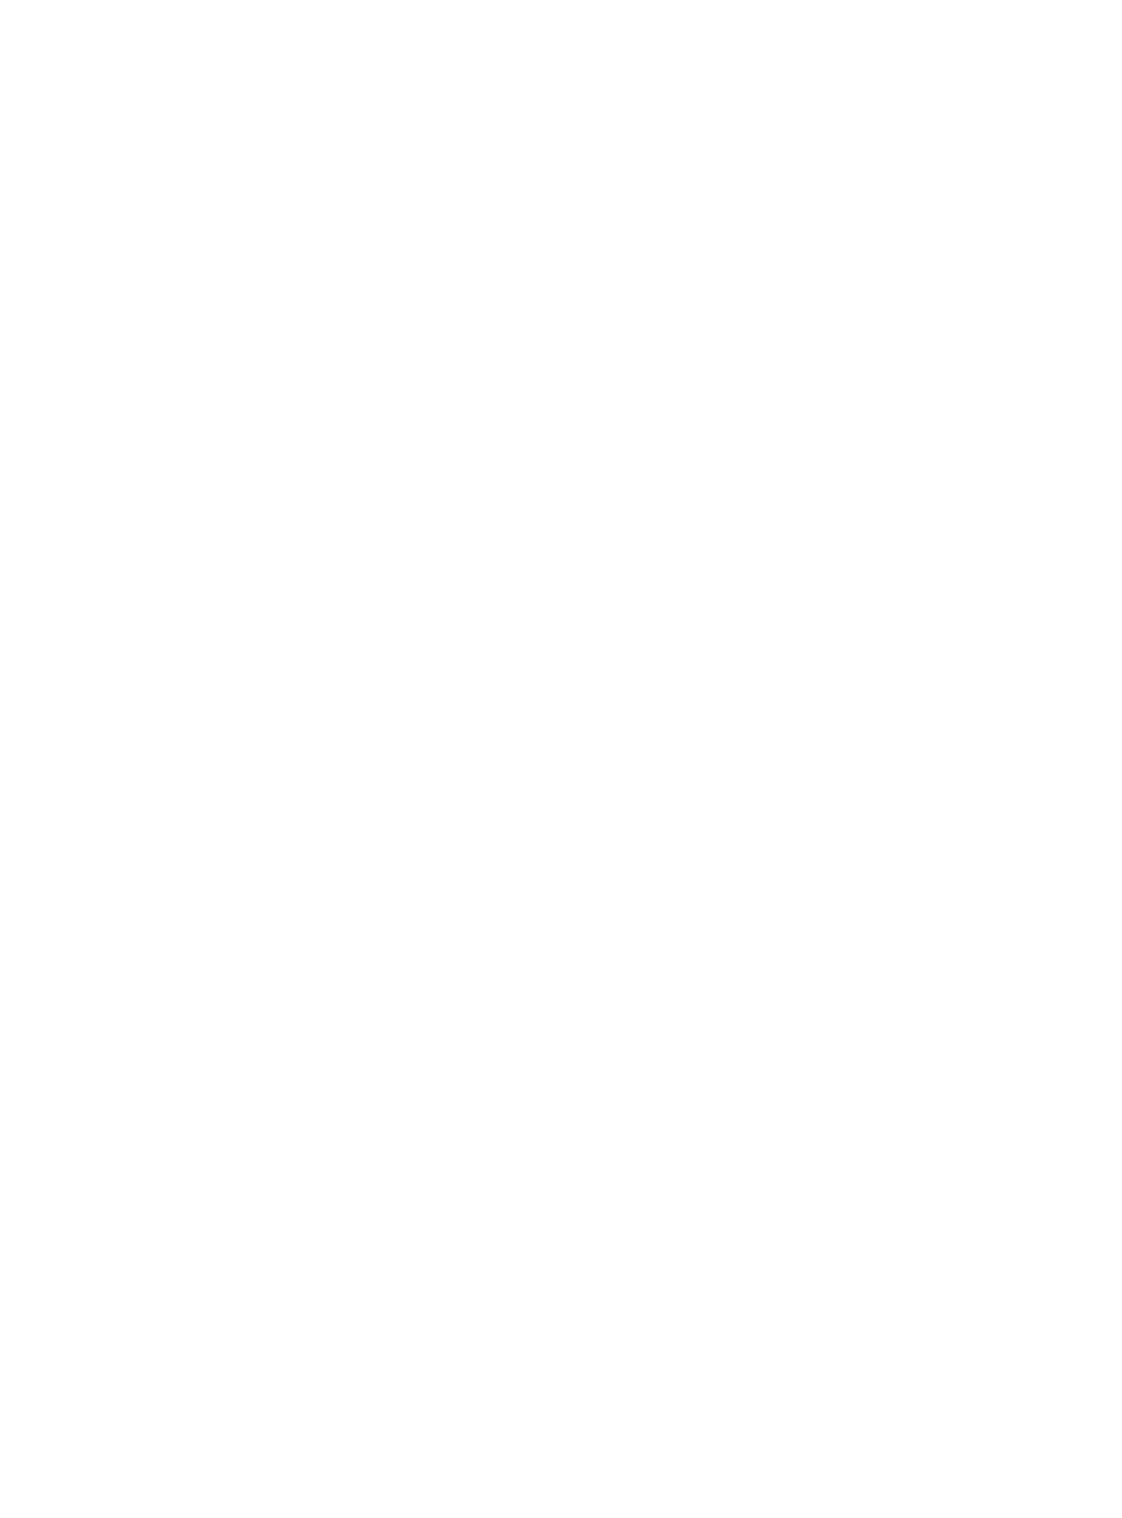 Frank XII